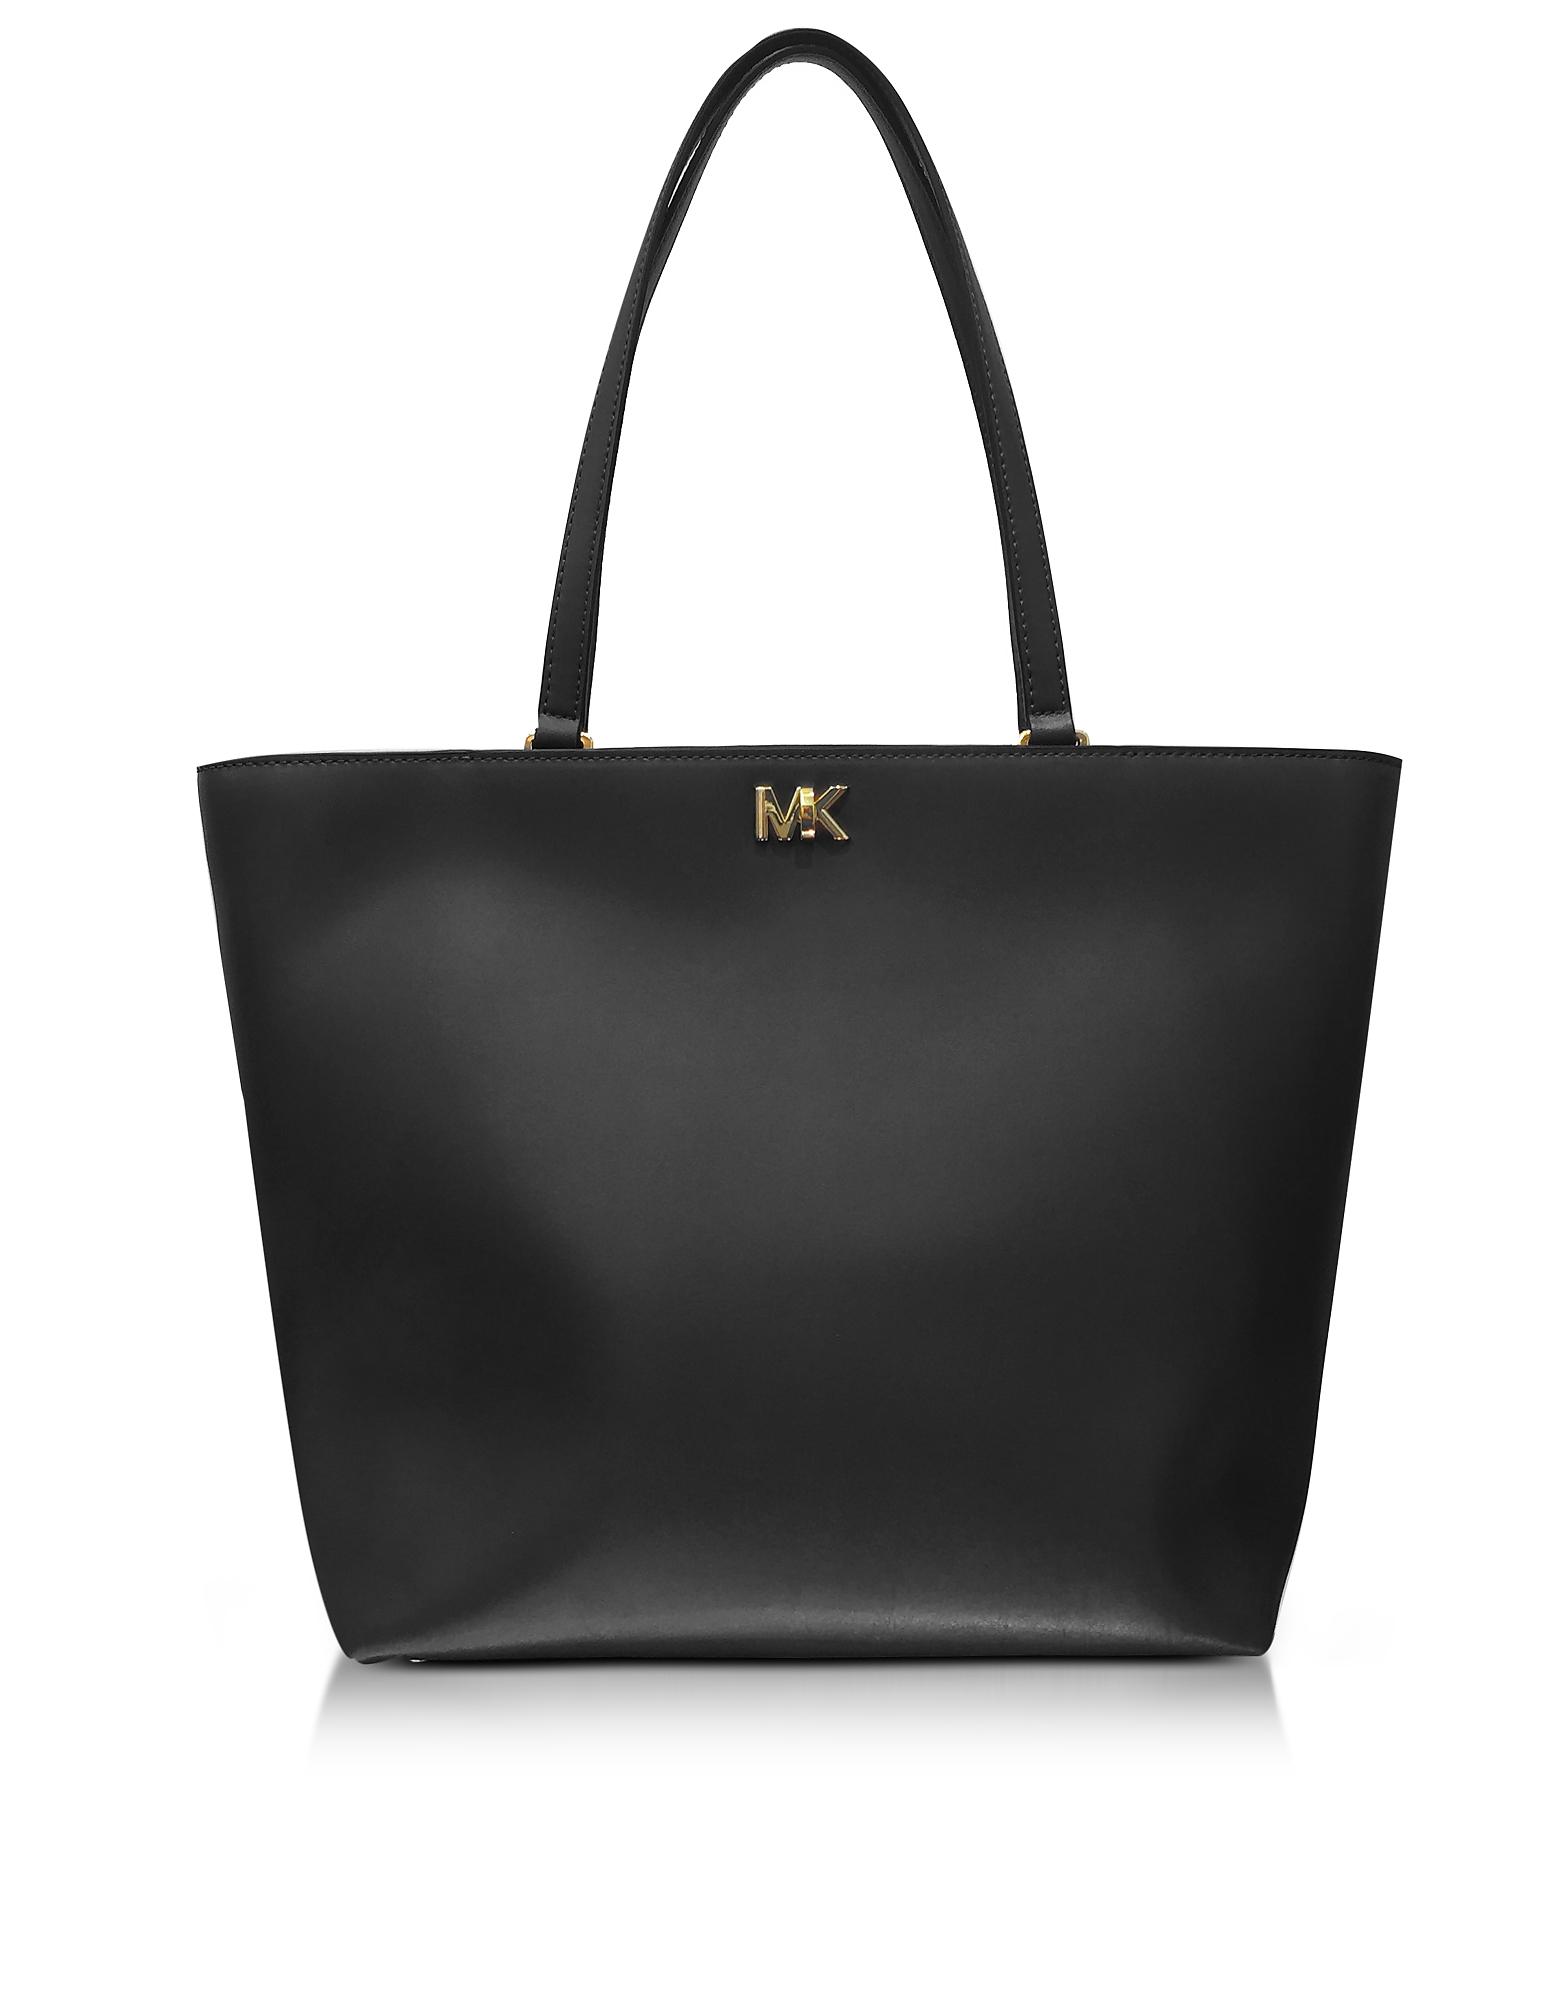 Michael Kors Mott Medium Black Leather Tote Bag in Black - Lyst